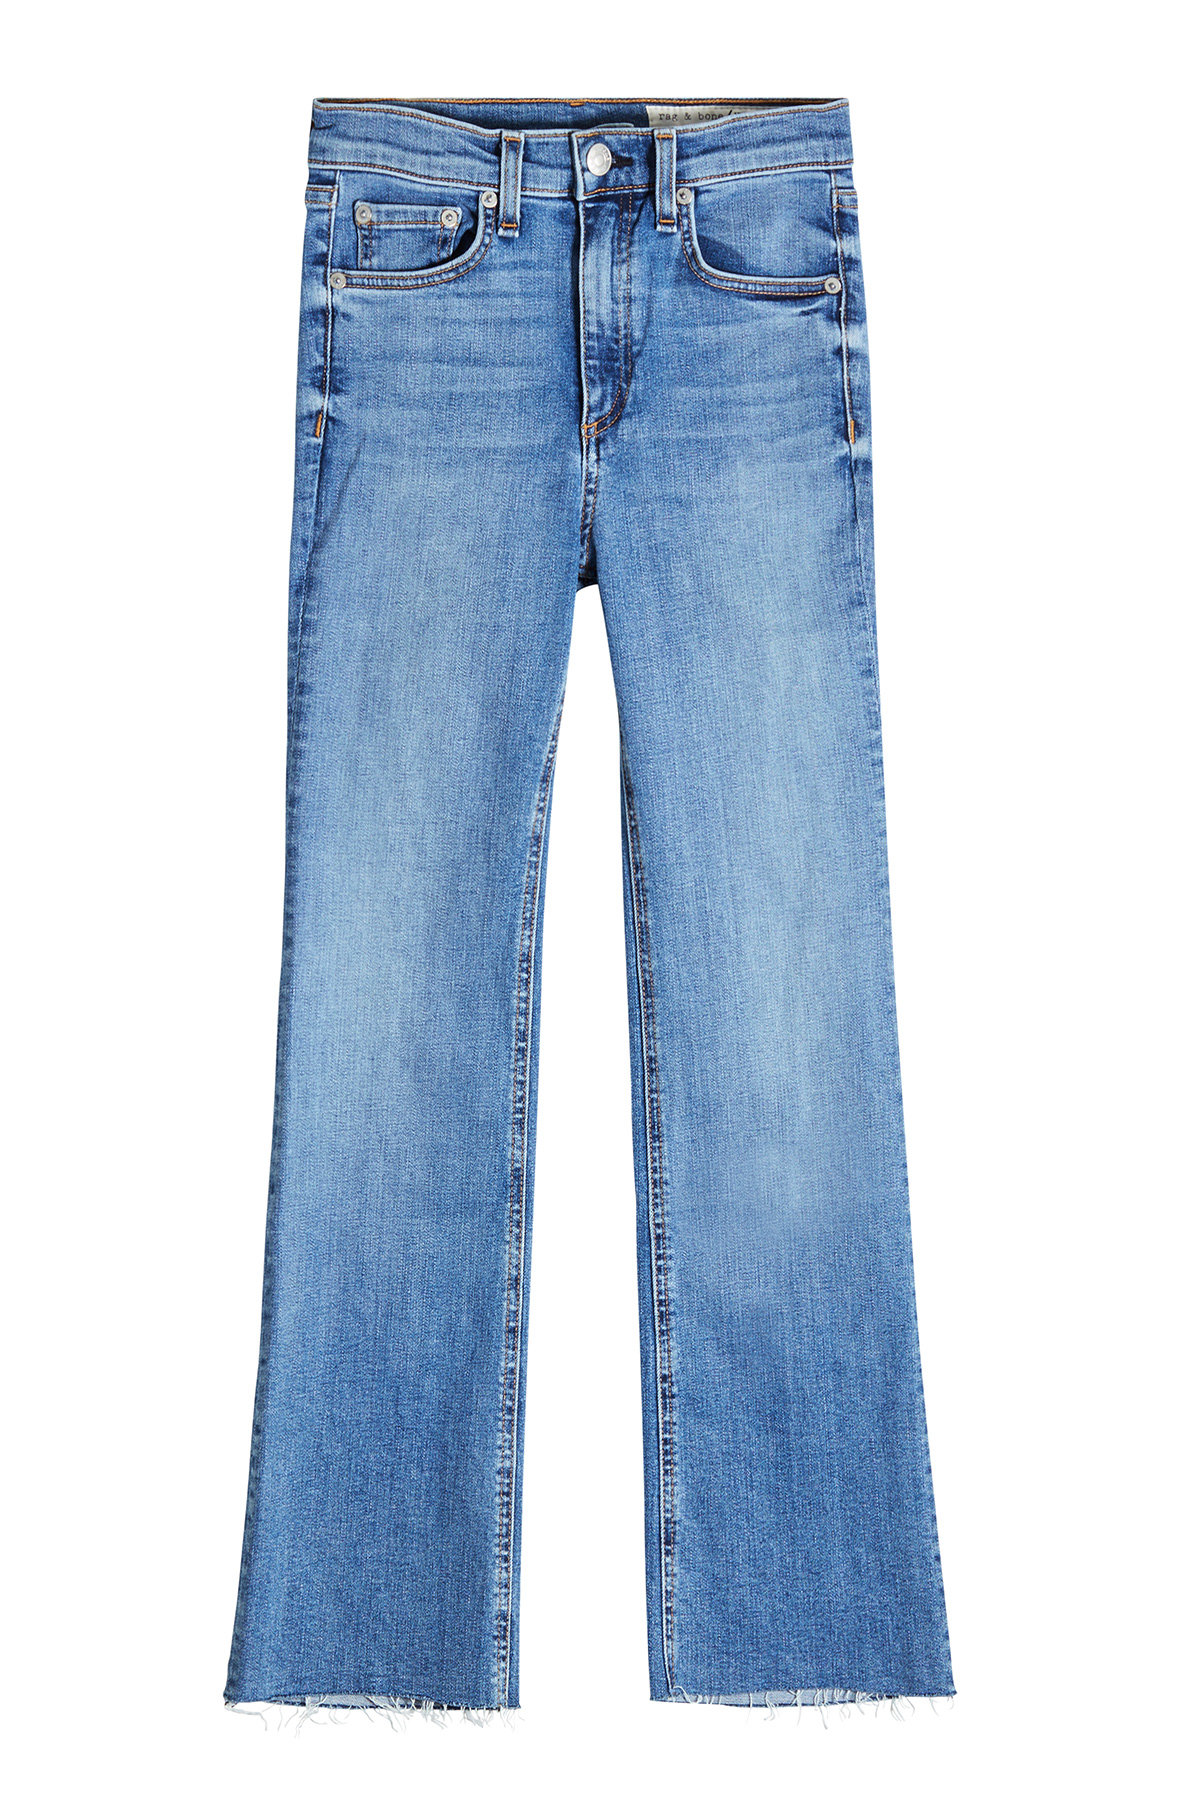 Rag & Bone - Hana Cropped Jeans